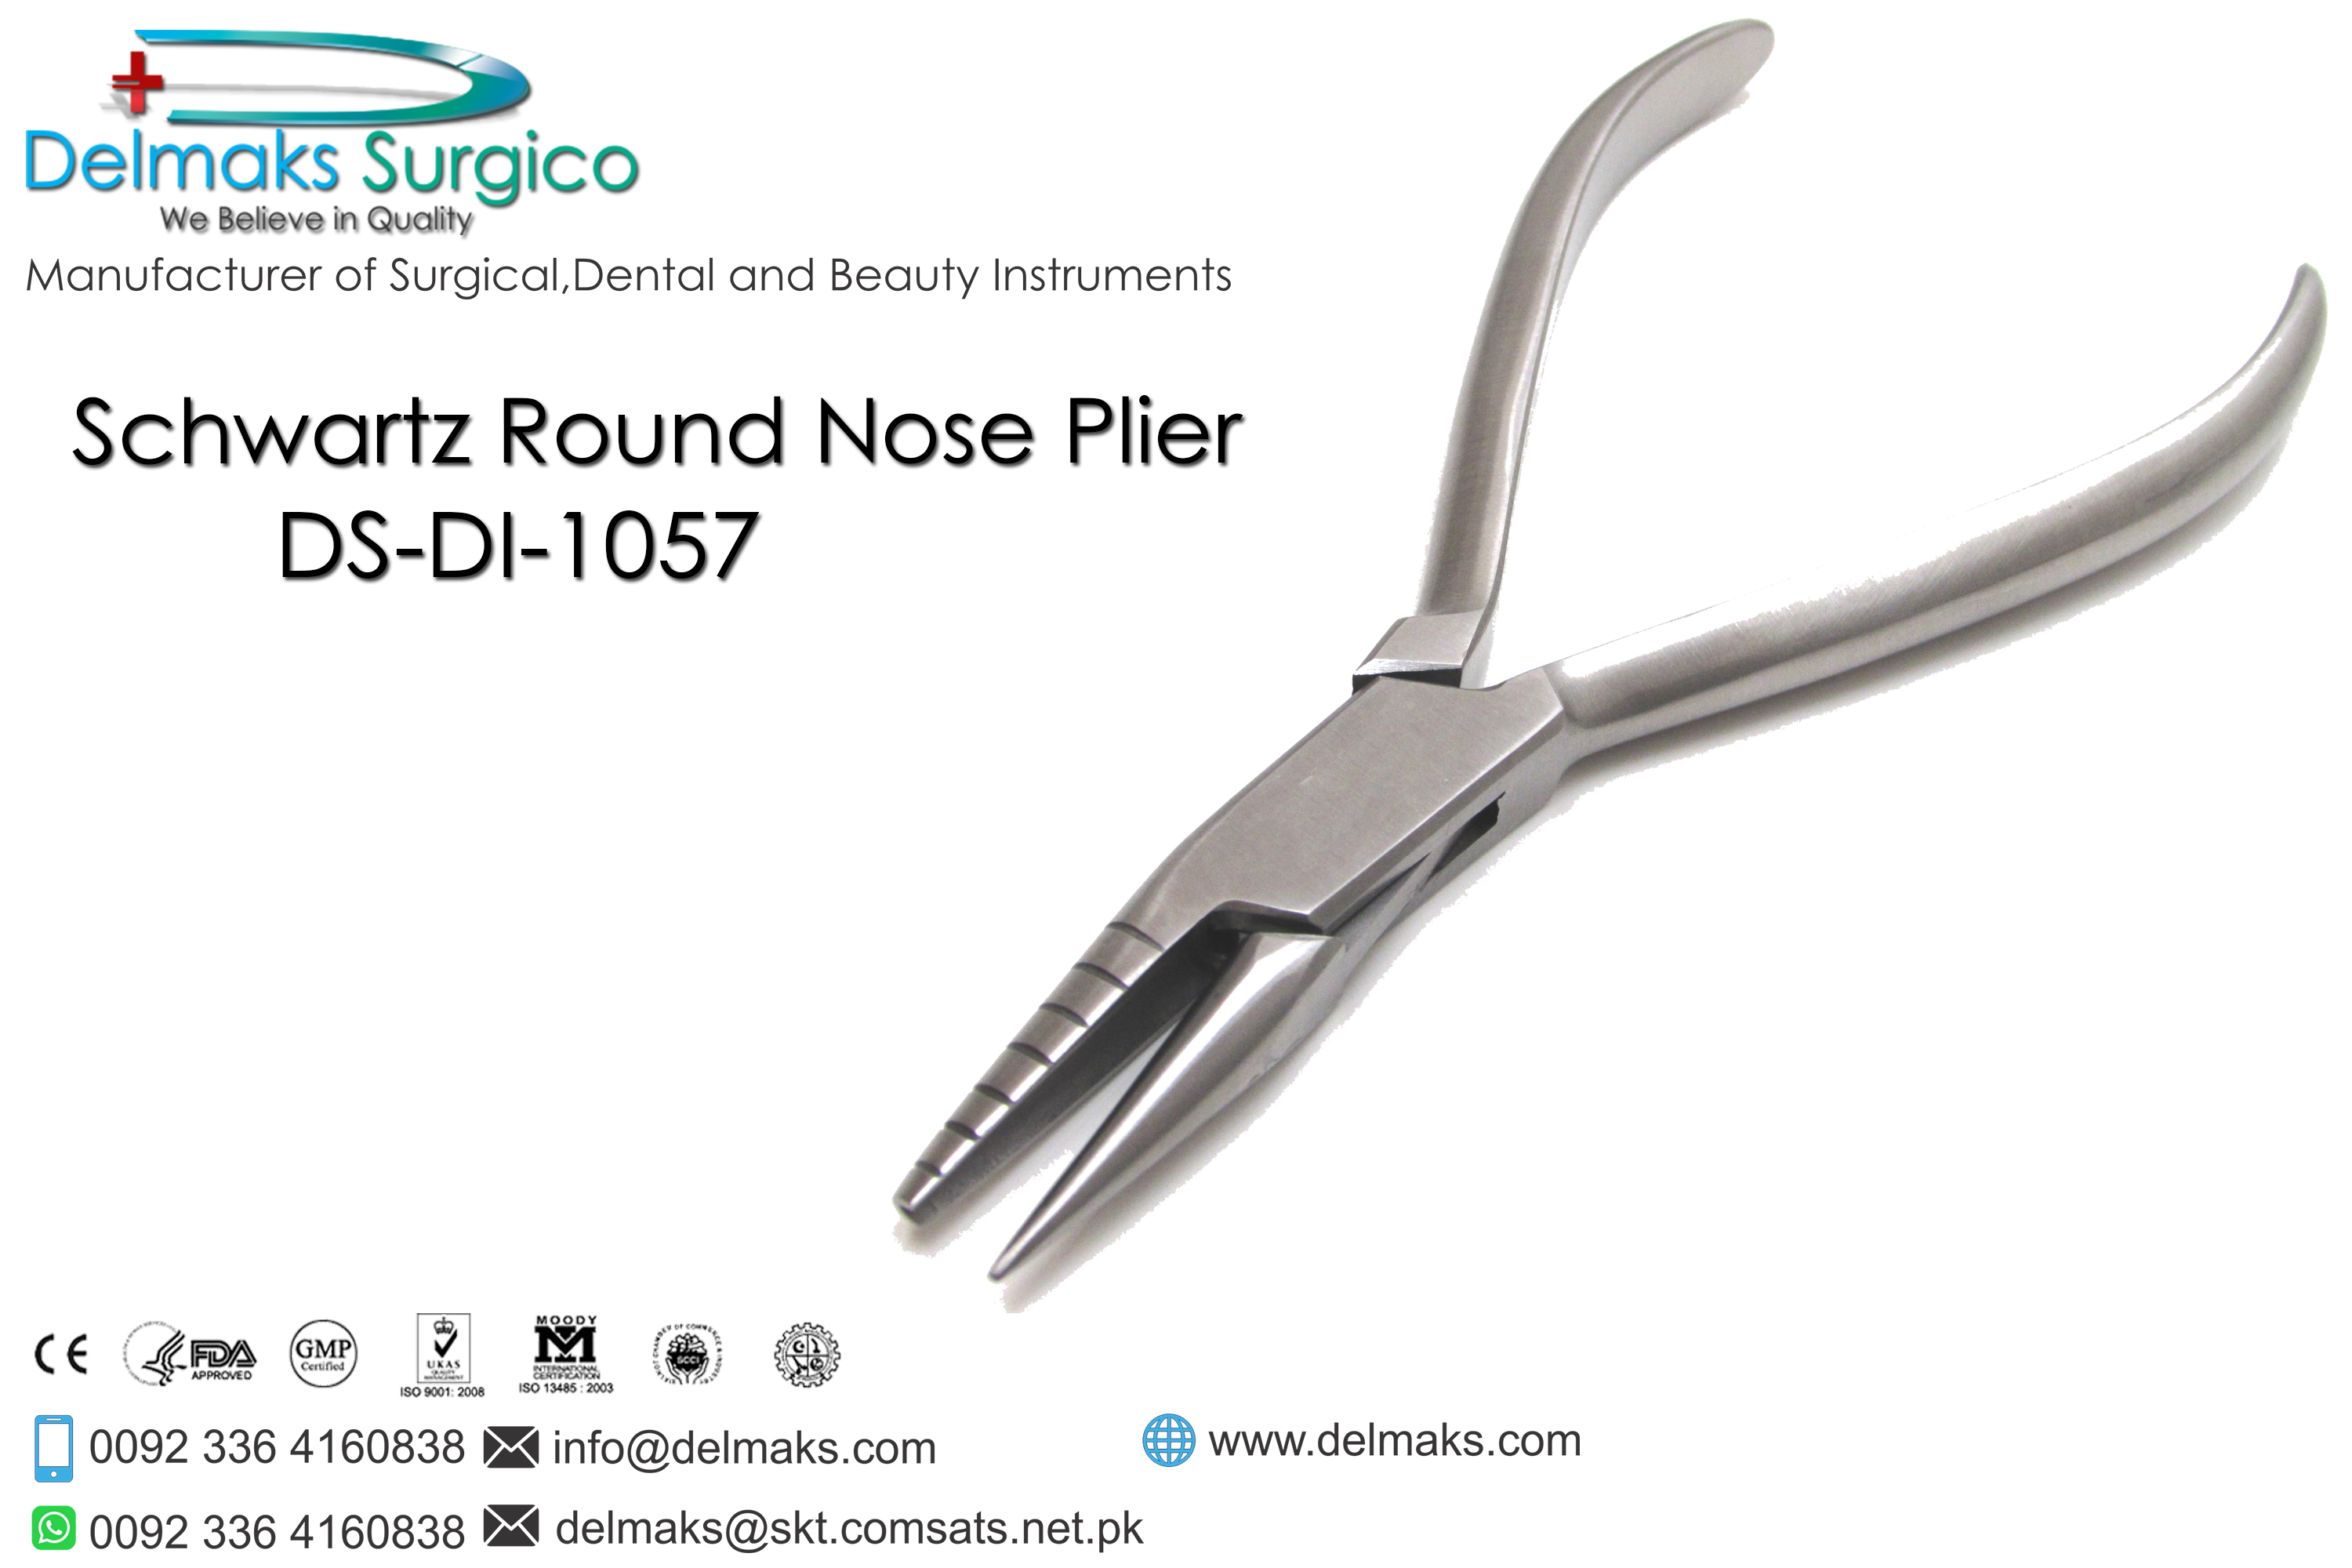 Hard Wire Cutter Plier(TC)-Orhtodontic Pliers-Orthodontics-Dental Instruments-Delmaks Surgico